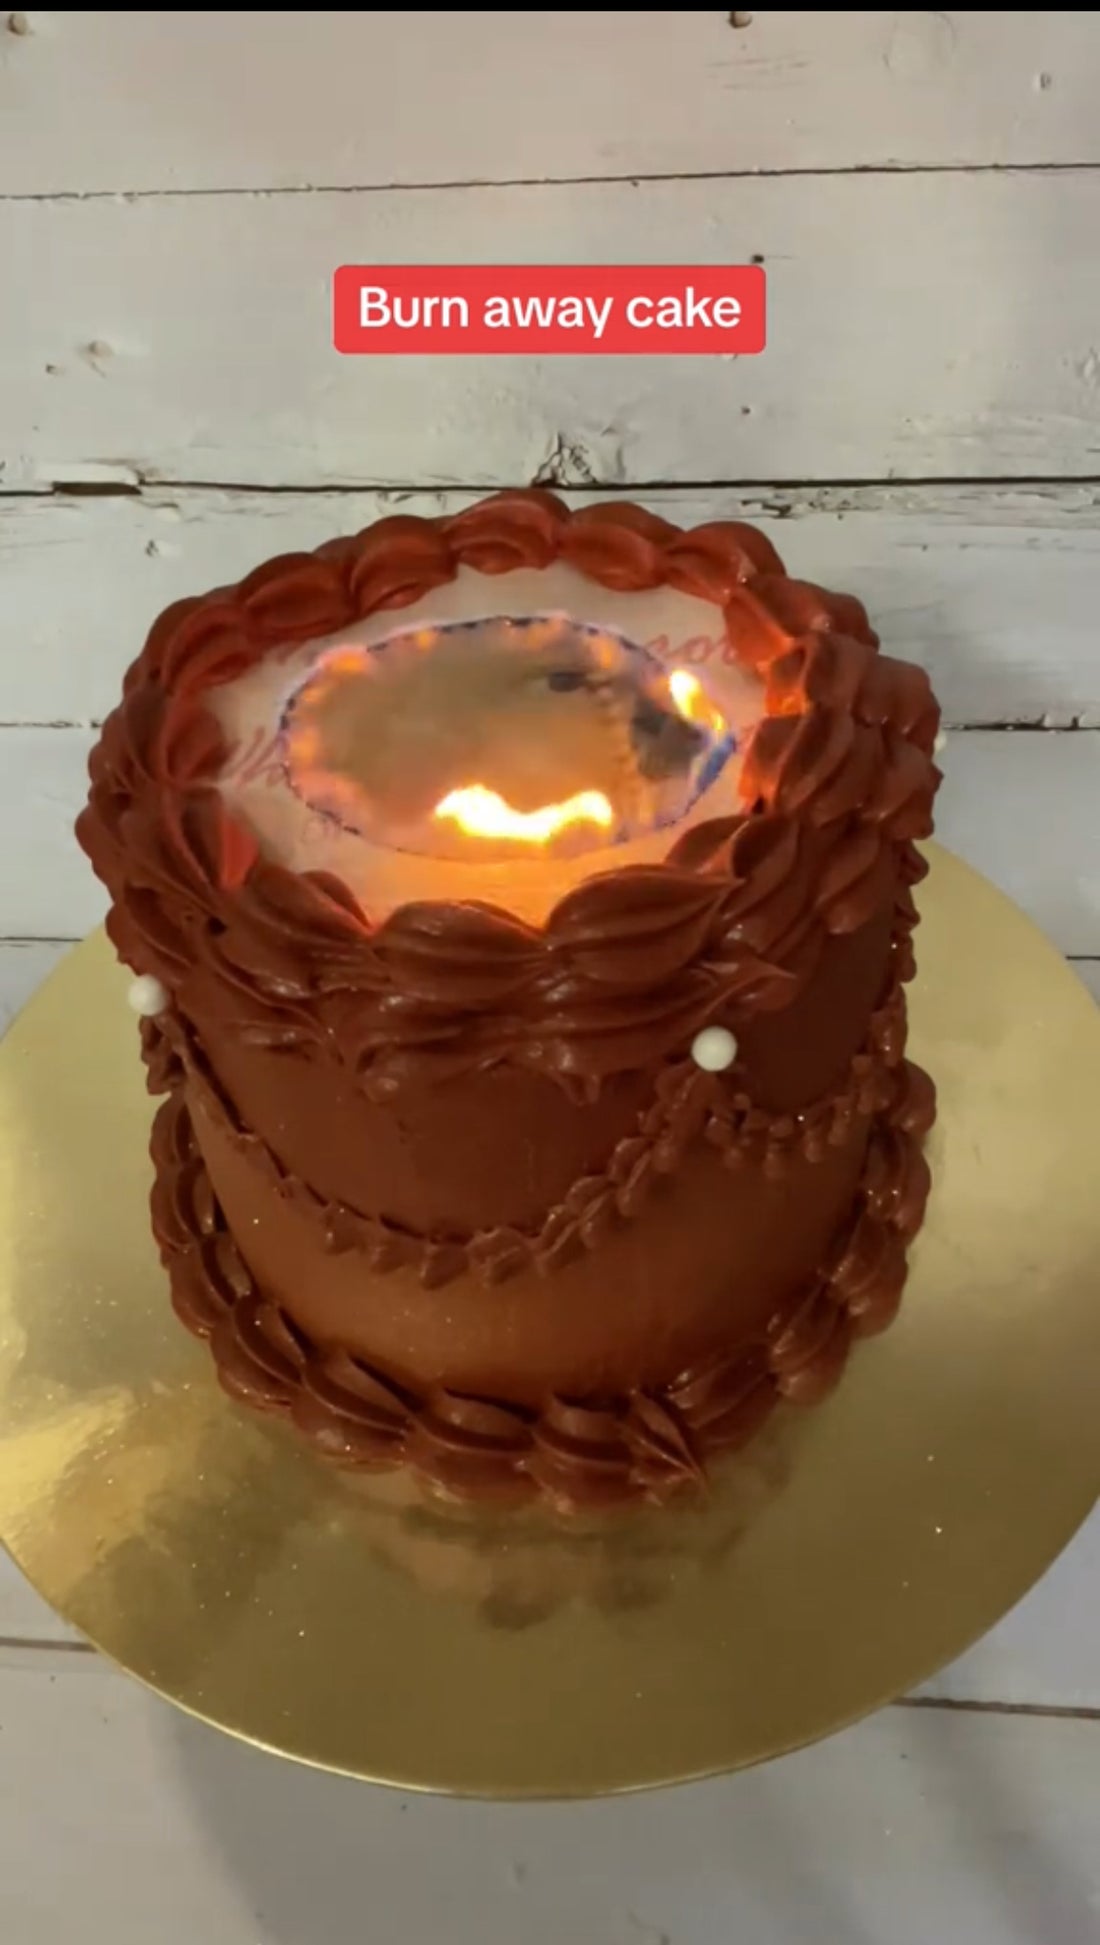 New Viral Burn Away Cake